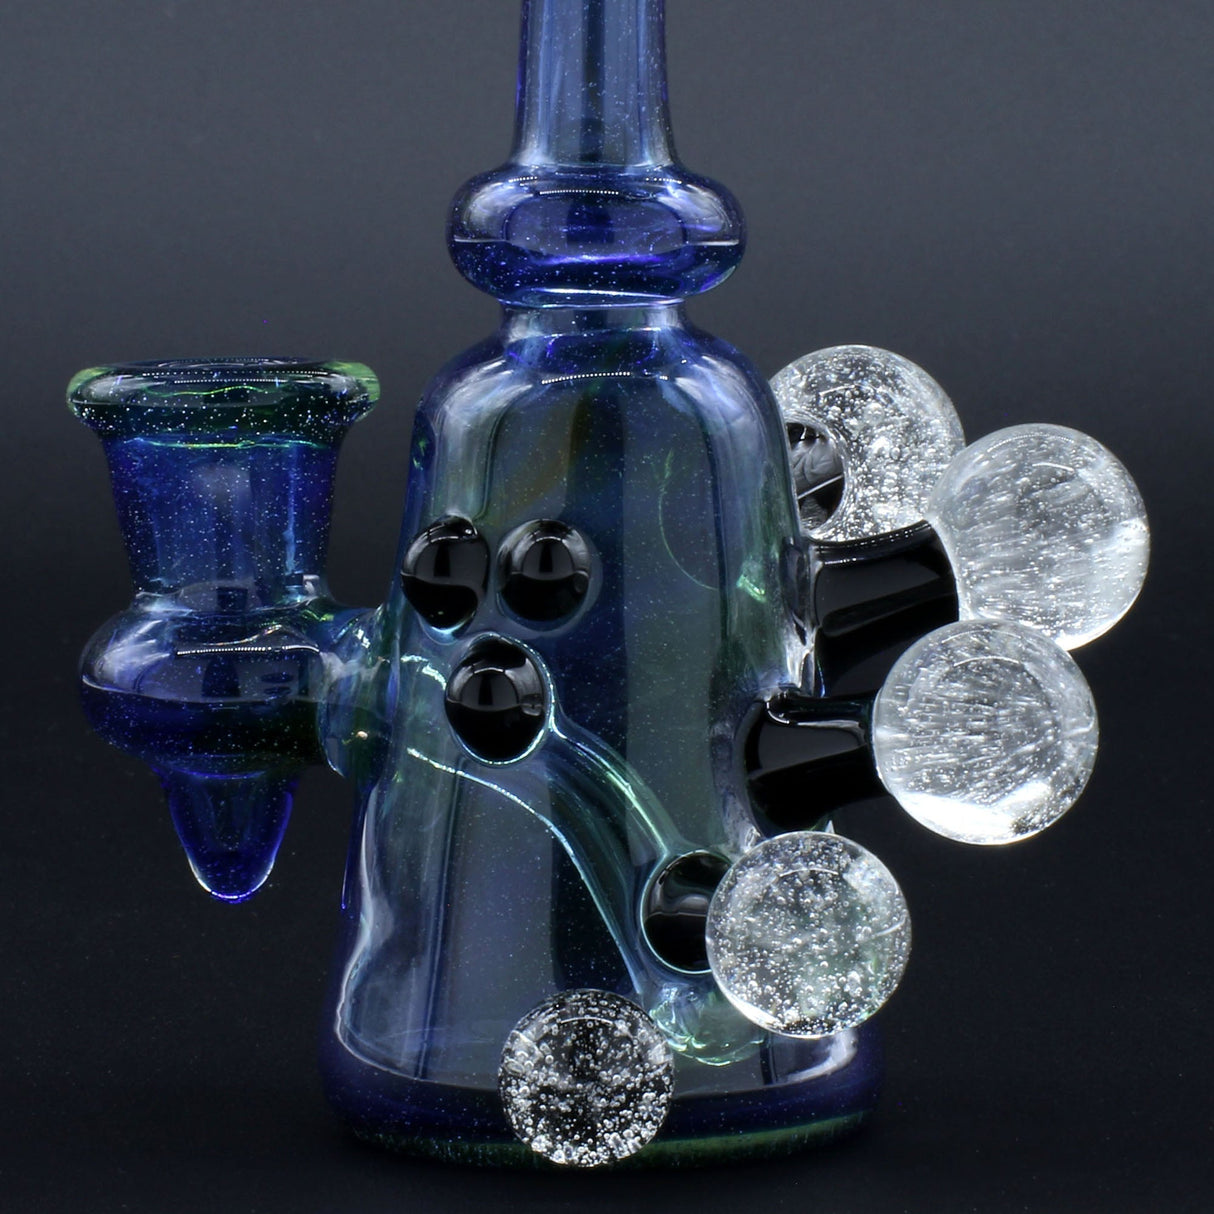 Clayball Glass "Super Nova" Heady Sherlock Dab Rig with intricate glass bubbles, 5.5" tall, USA made